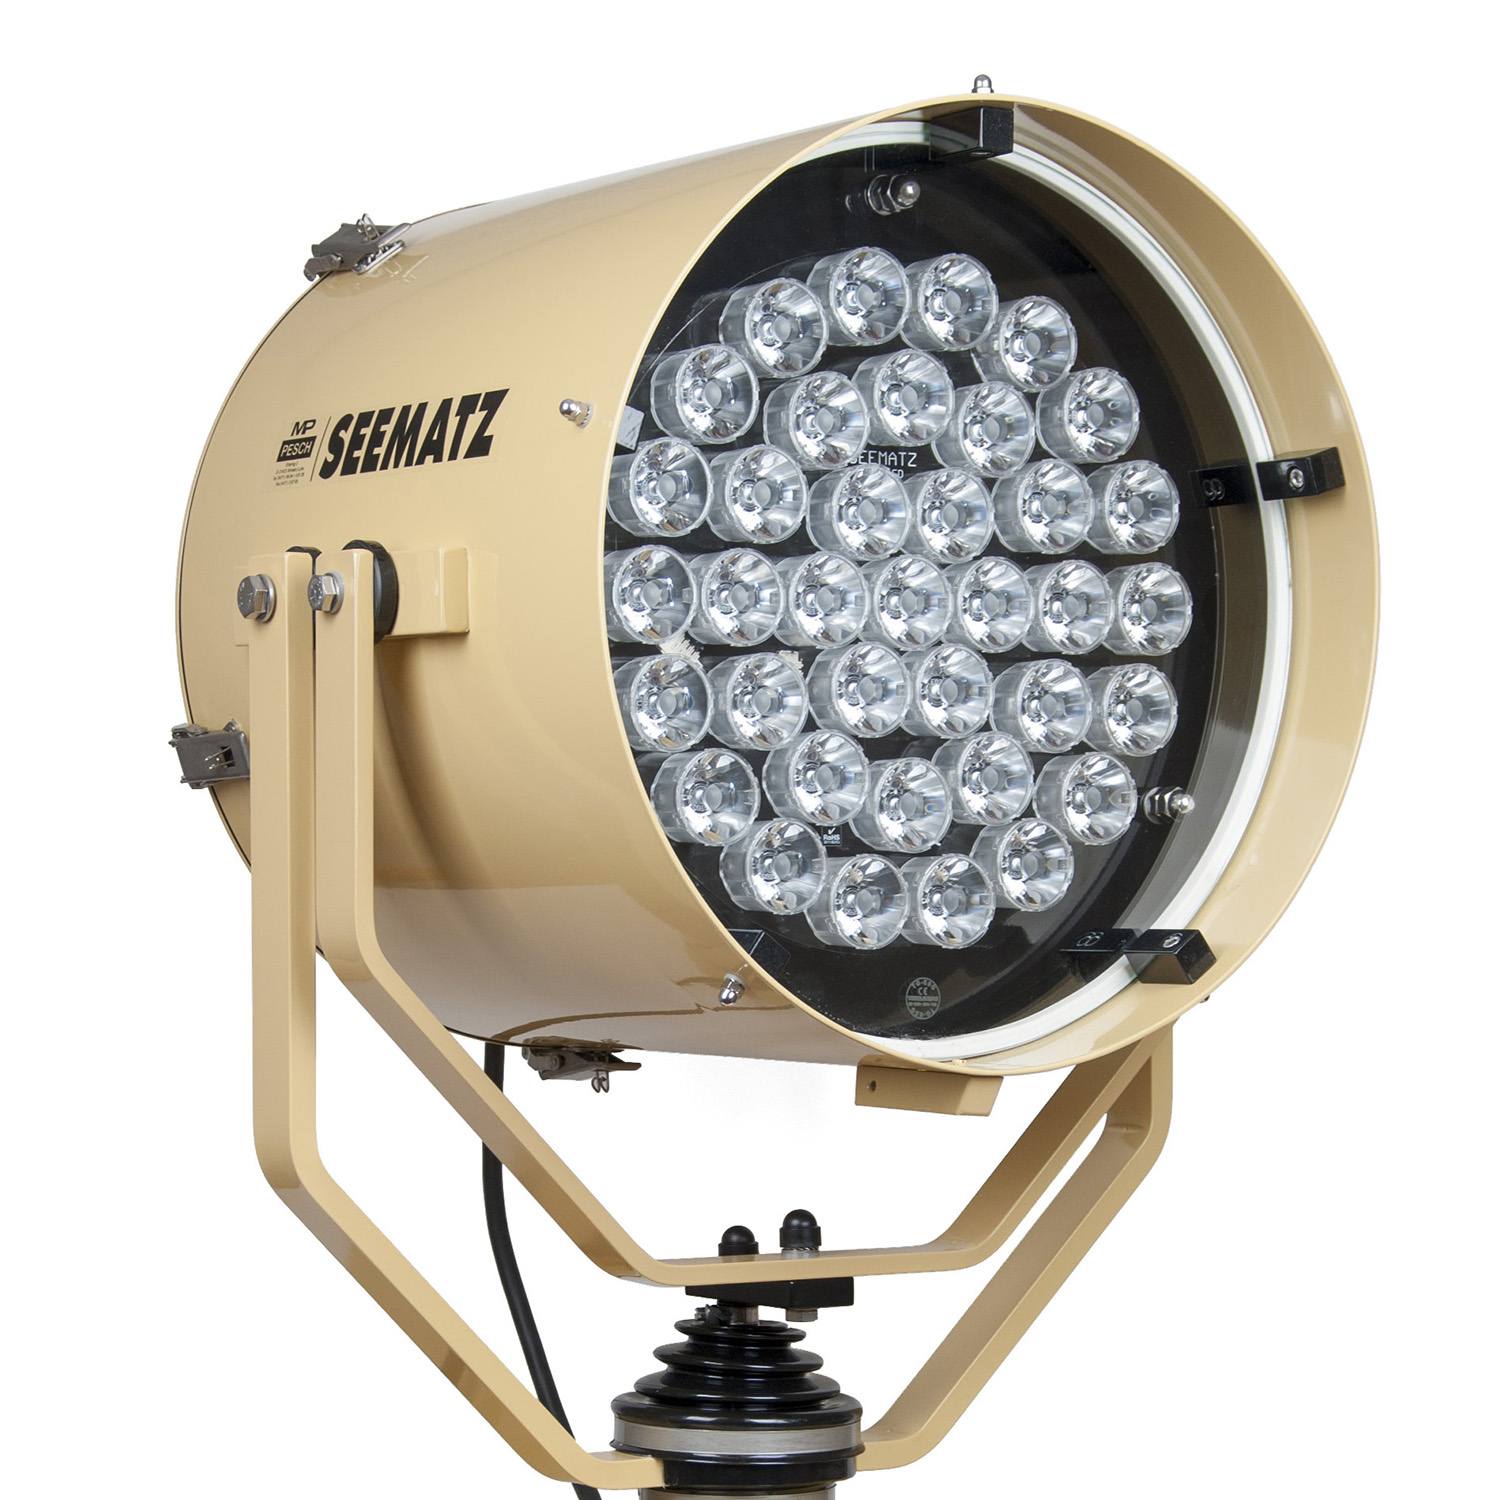 351LED230150WB Searchlight LED power 150W 230VAC Angle 11° 21879 lm Wide beam